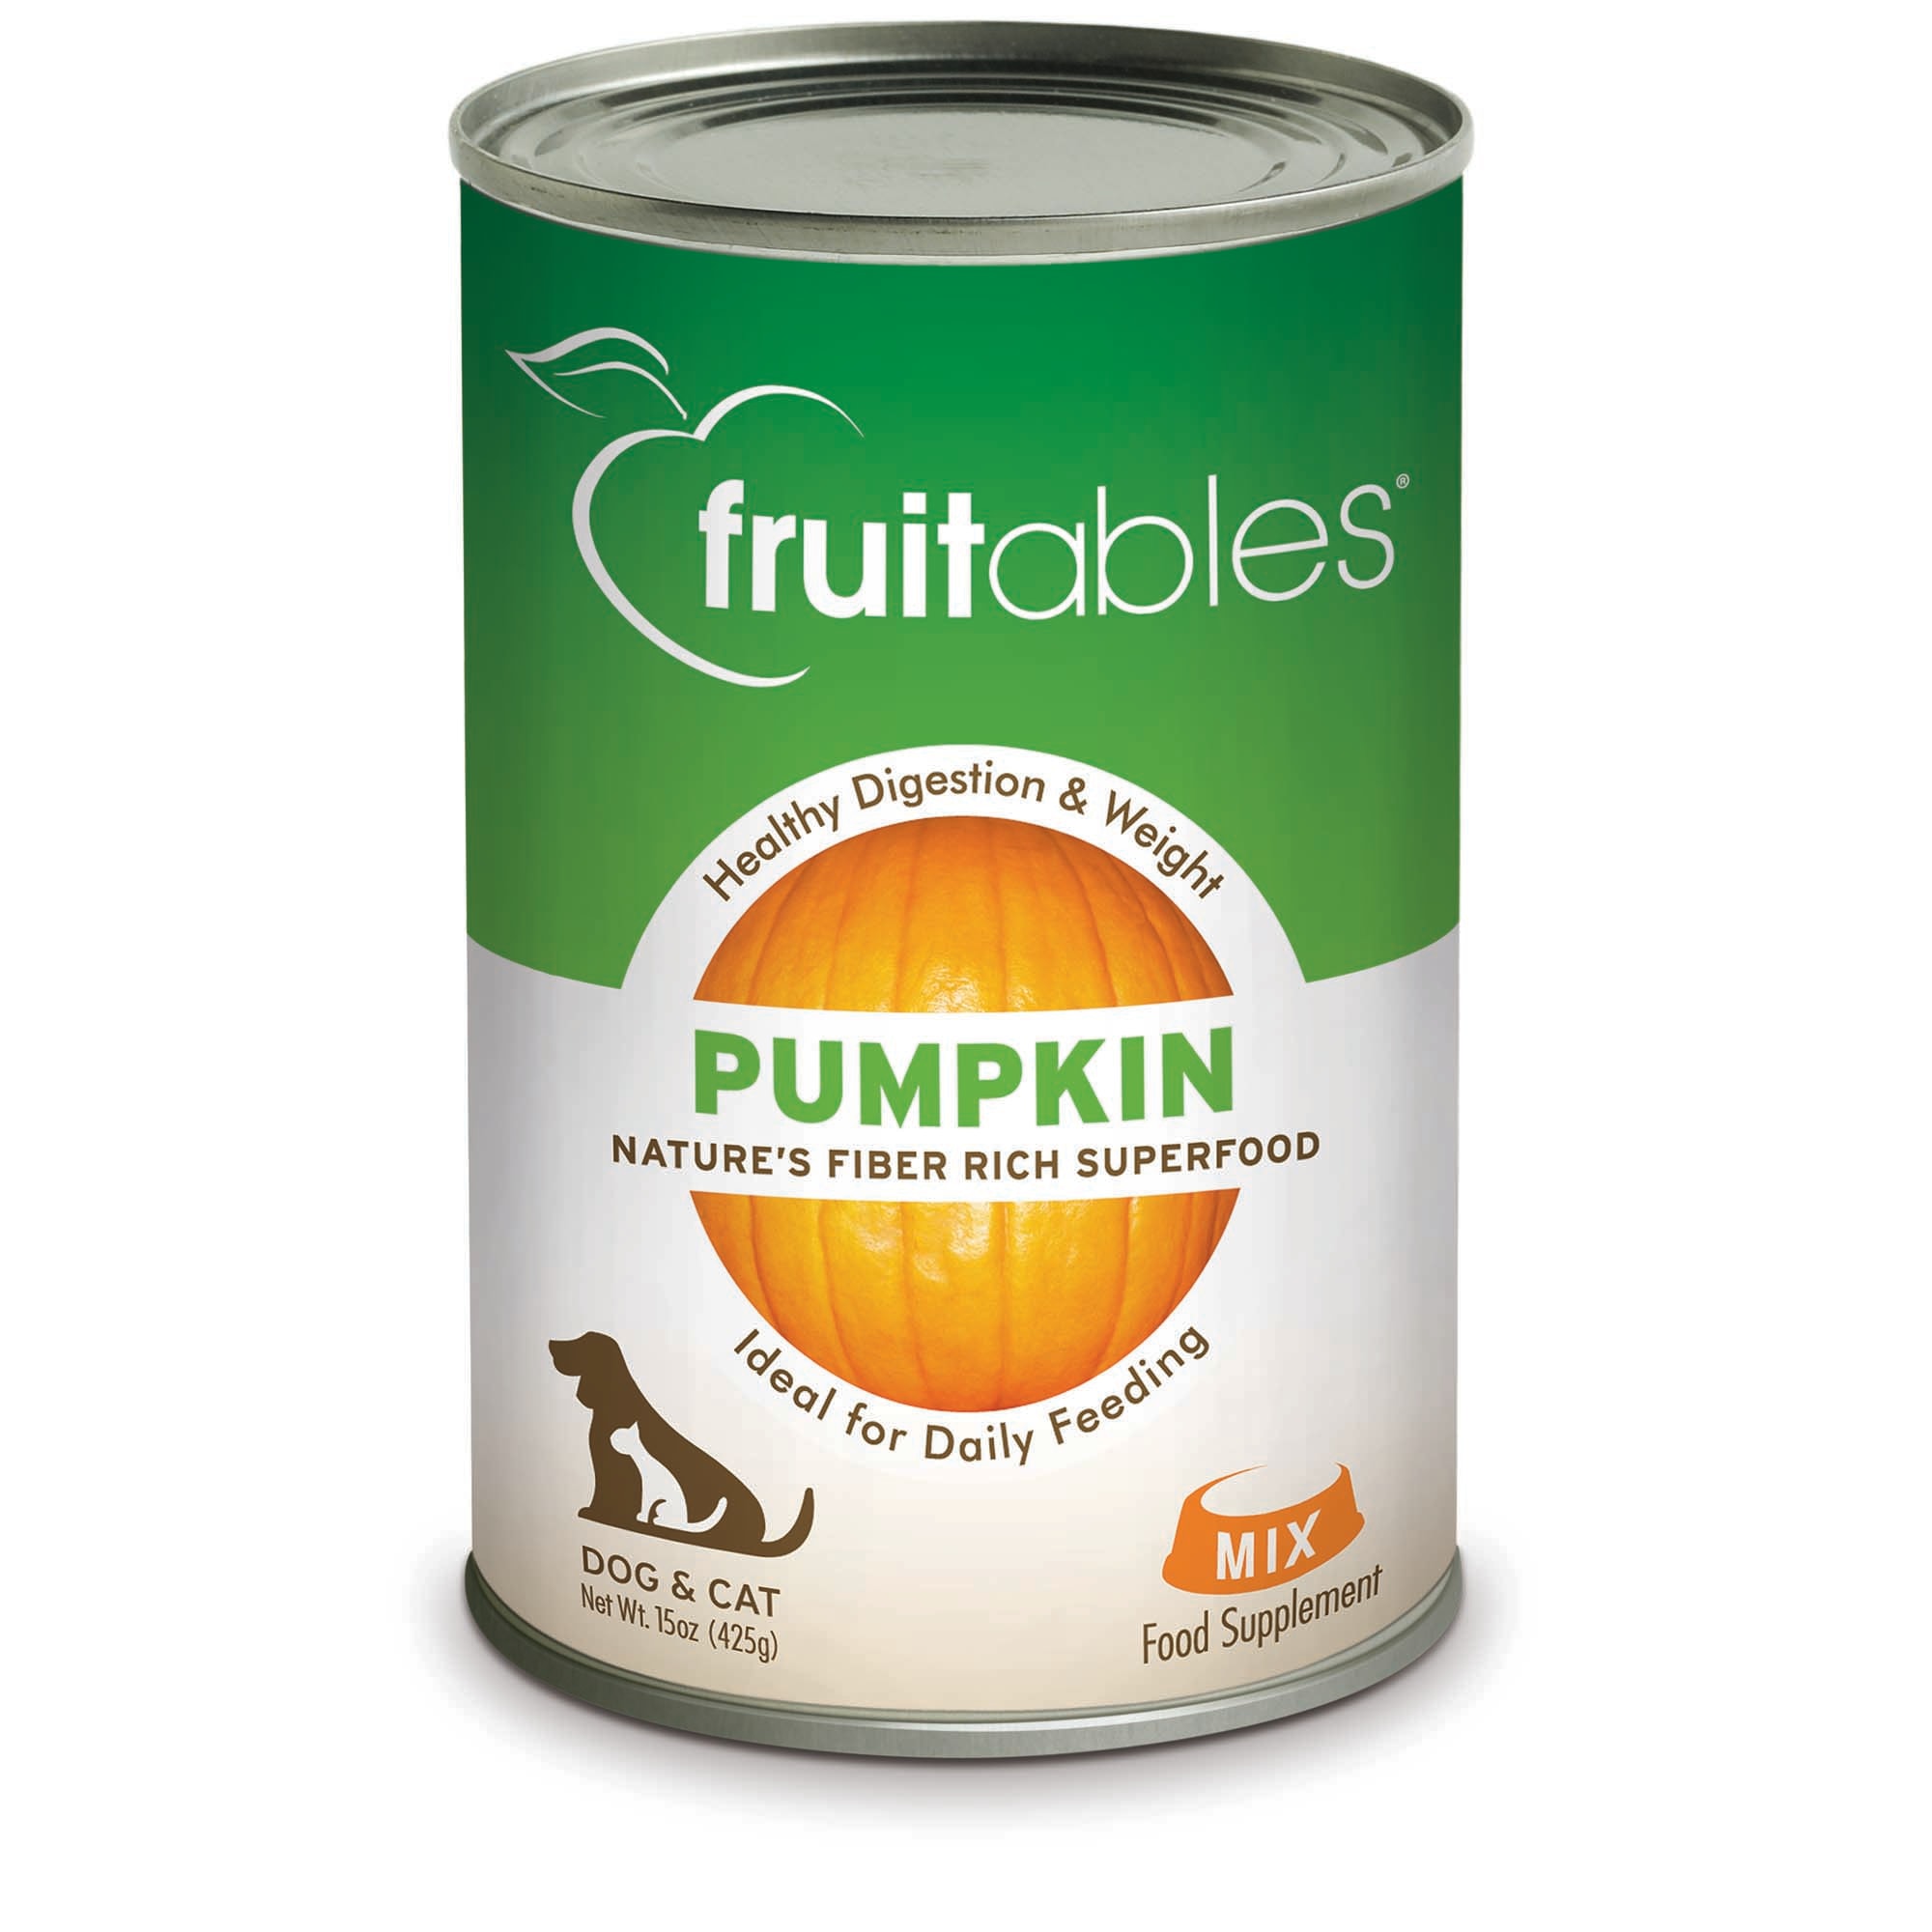 Fruitables Pet Pumpkin Canned Food, 15 